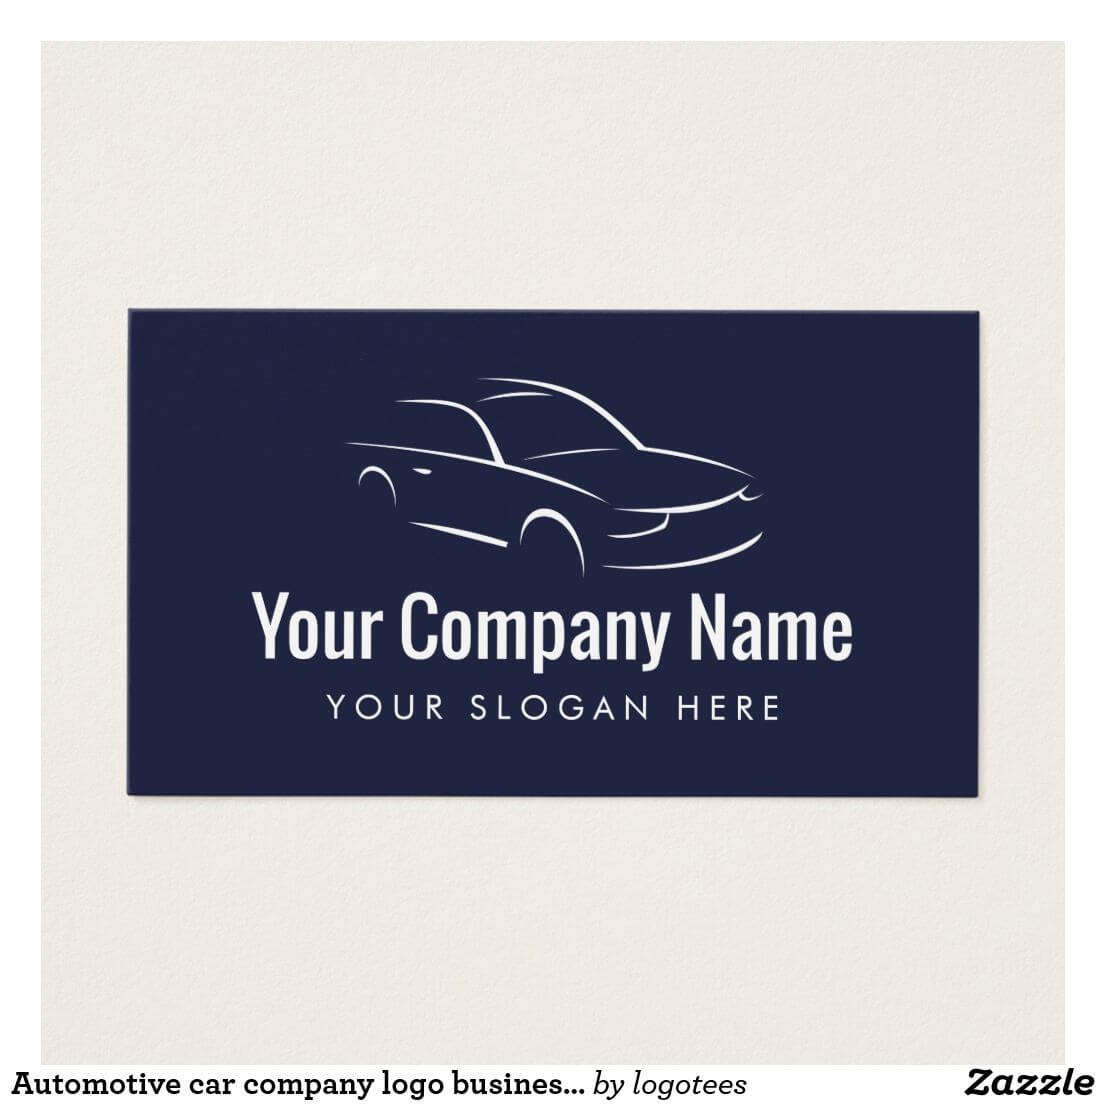 Automotive Car Company Logo Business Card Template | Zazzle With Regard To Automotive Business Card Templates